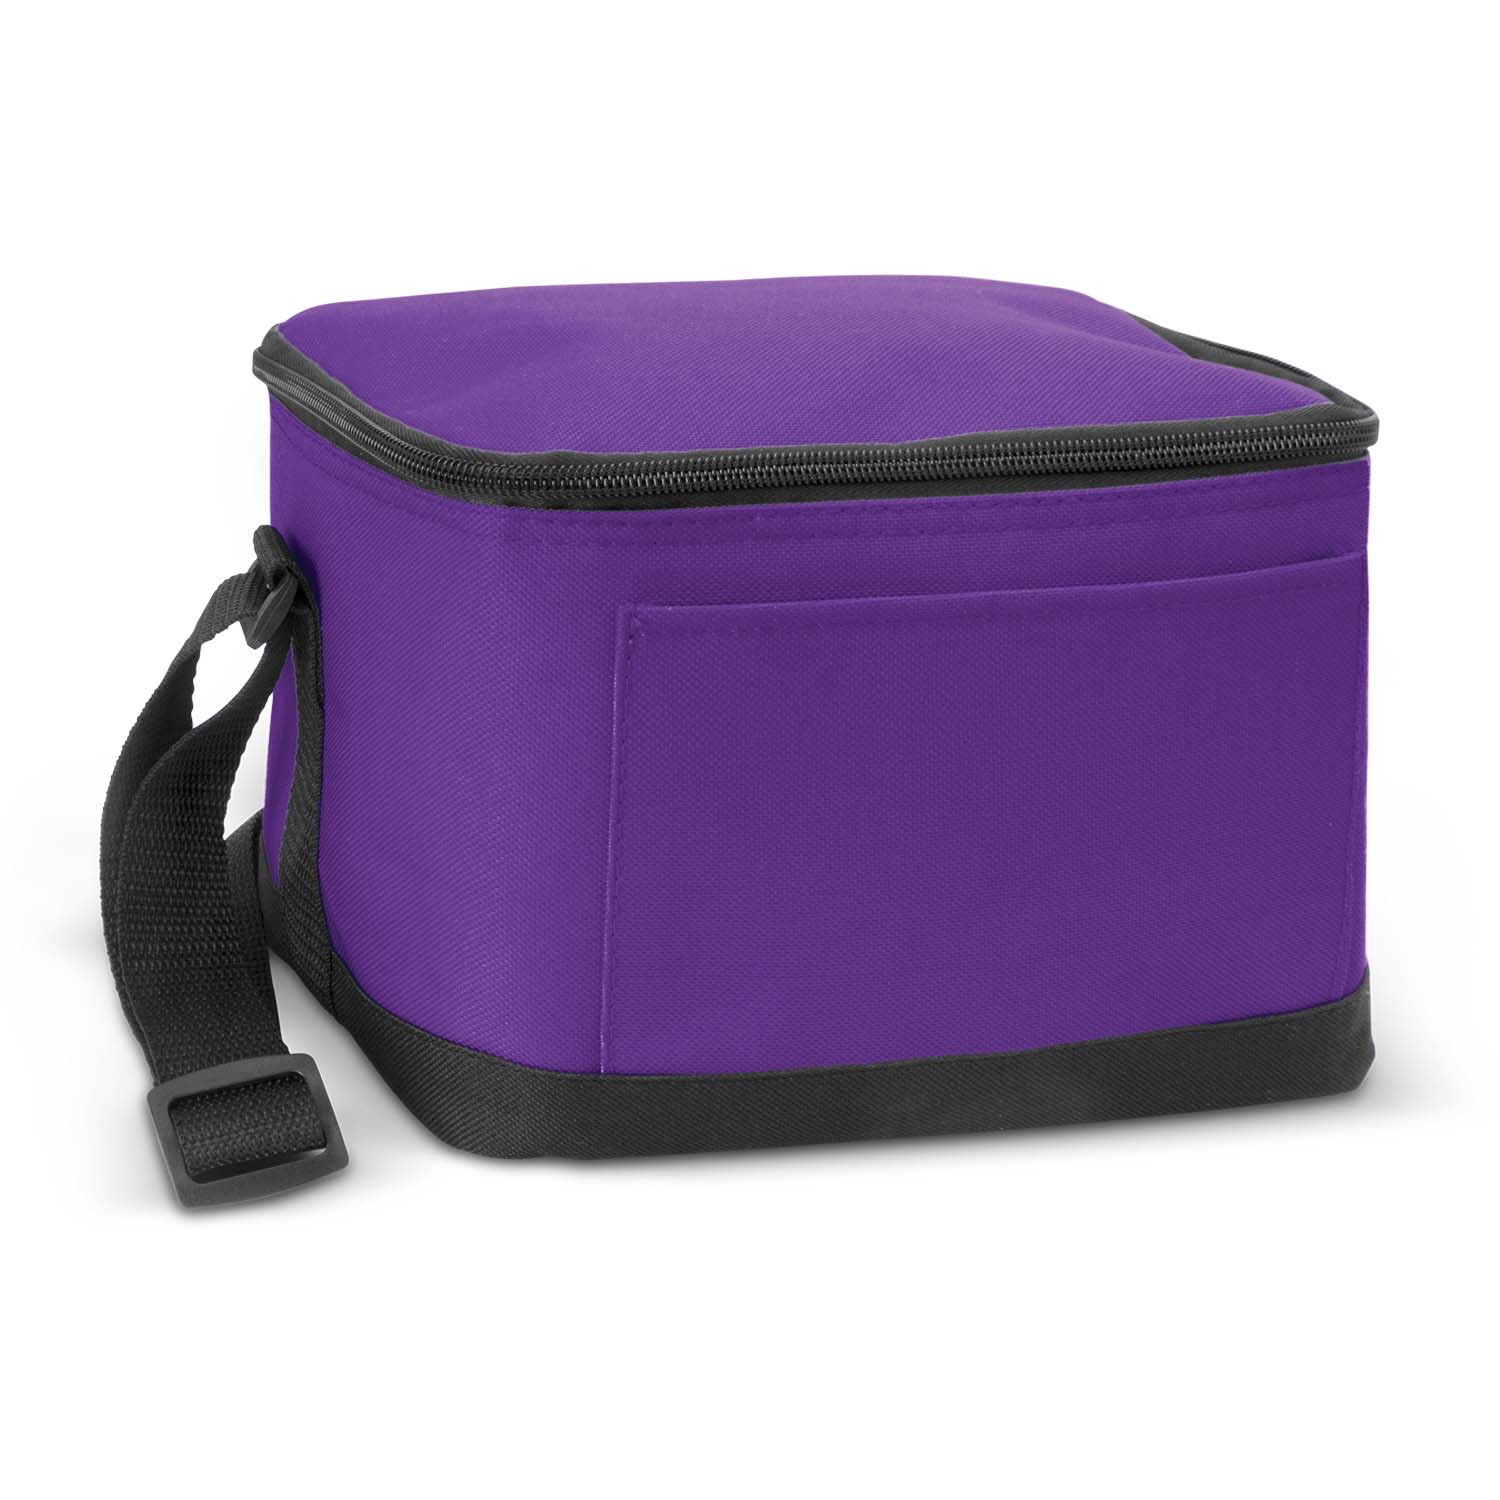 Buy Voilet Bathurst Cooler Bags Online in Perth